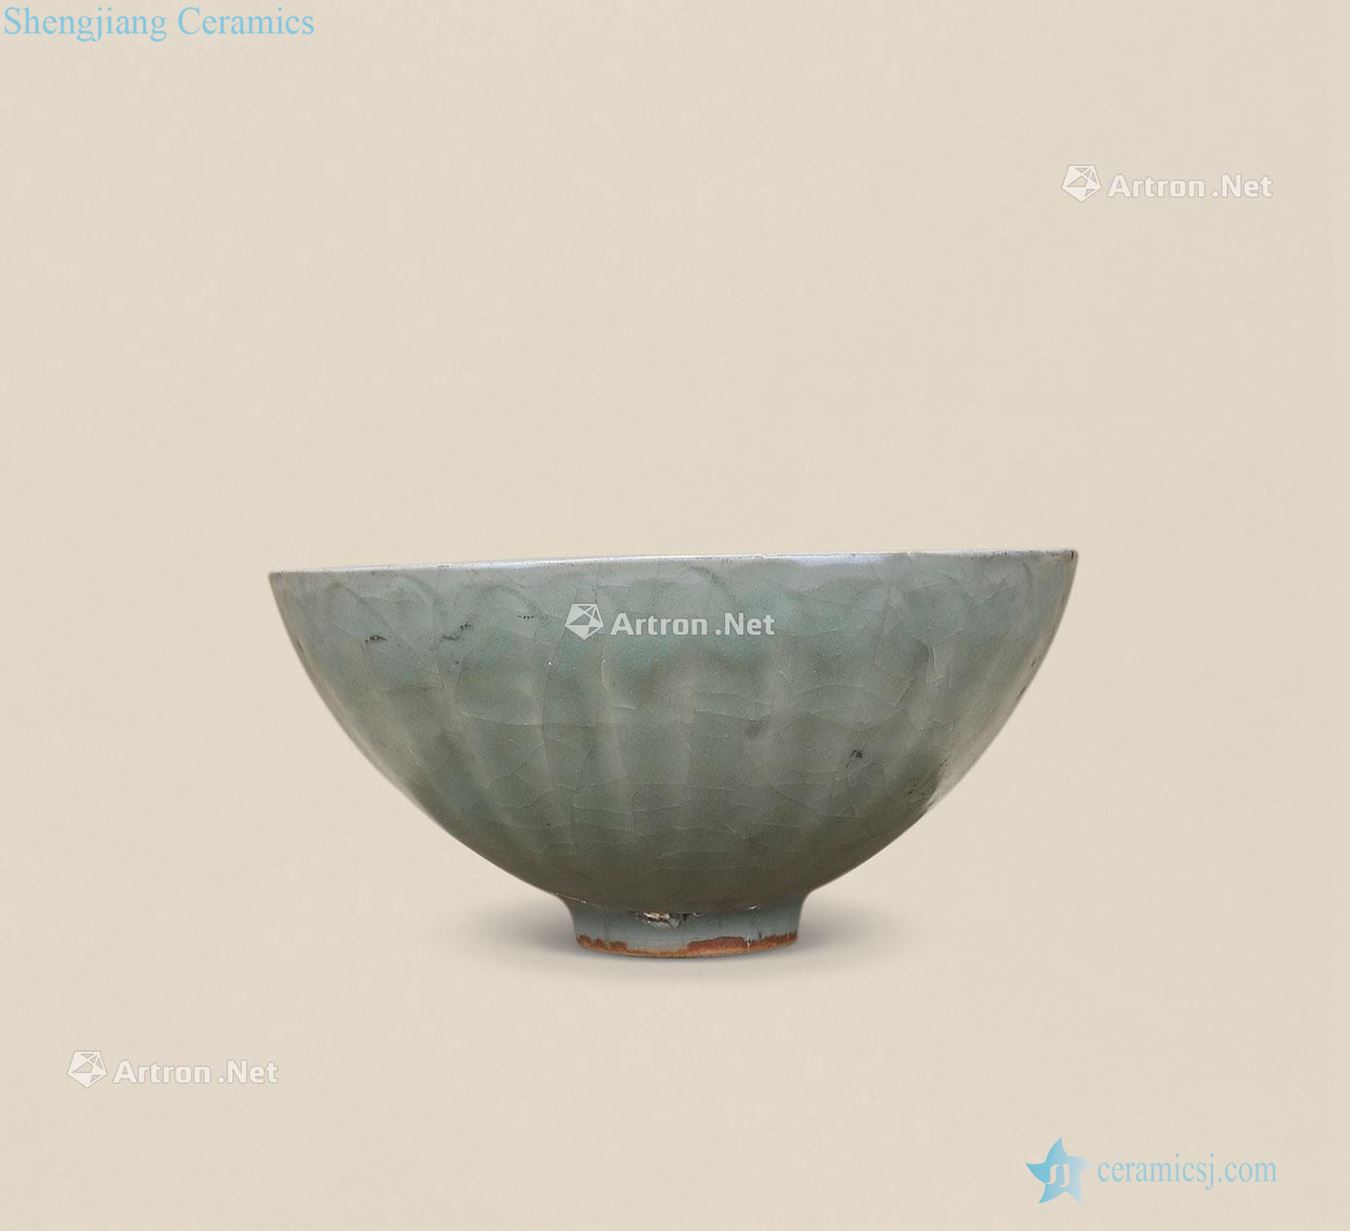 yuan Longquan celadon lotus-shaped bowl